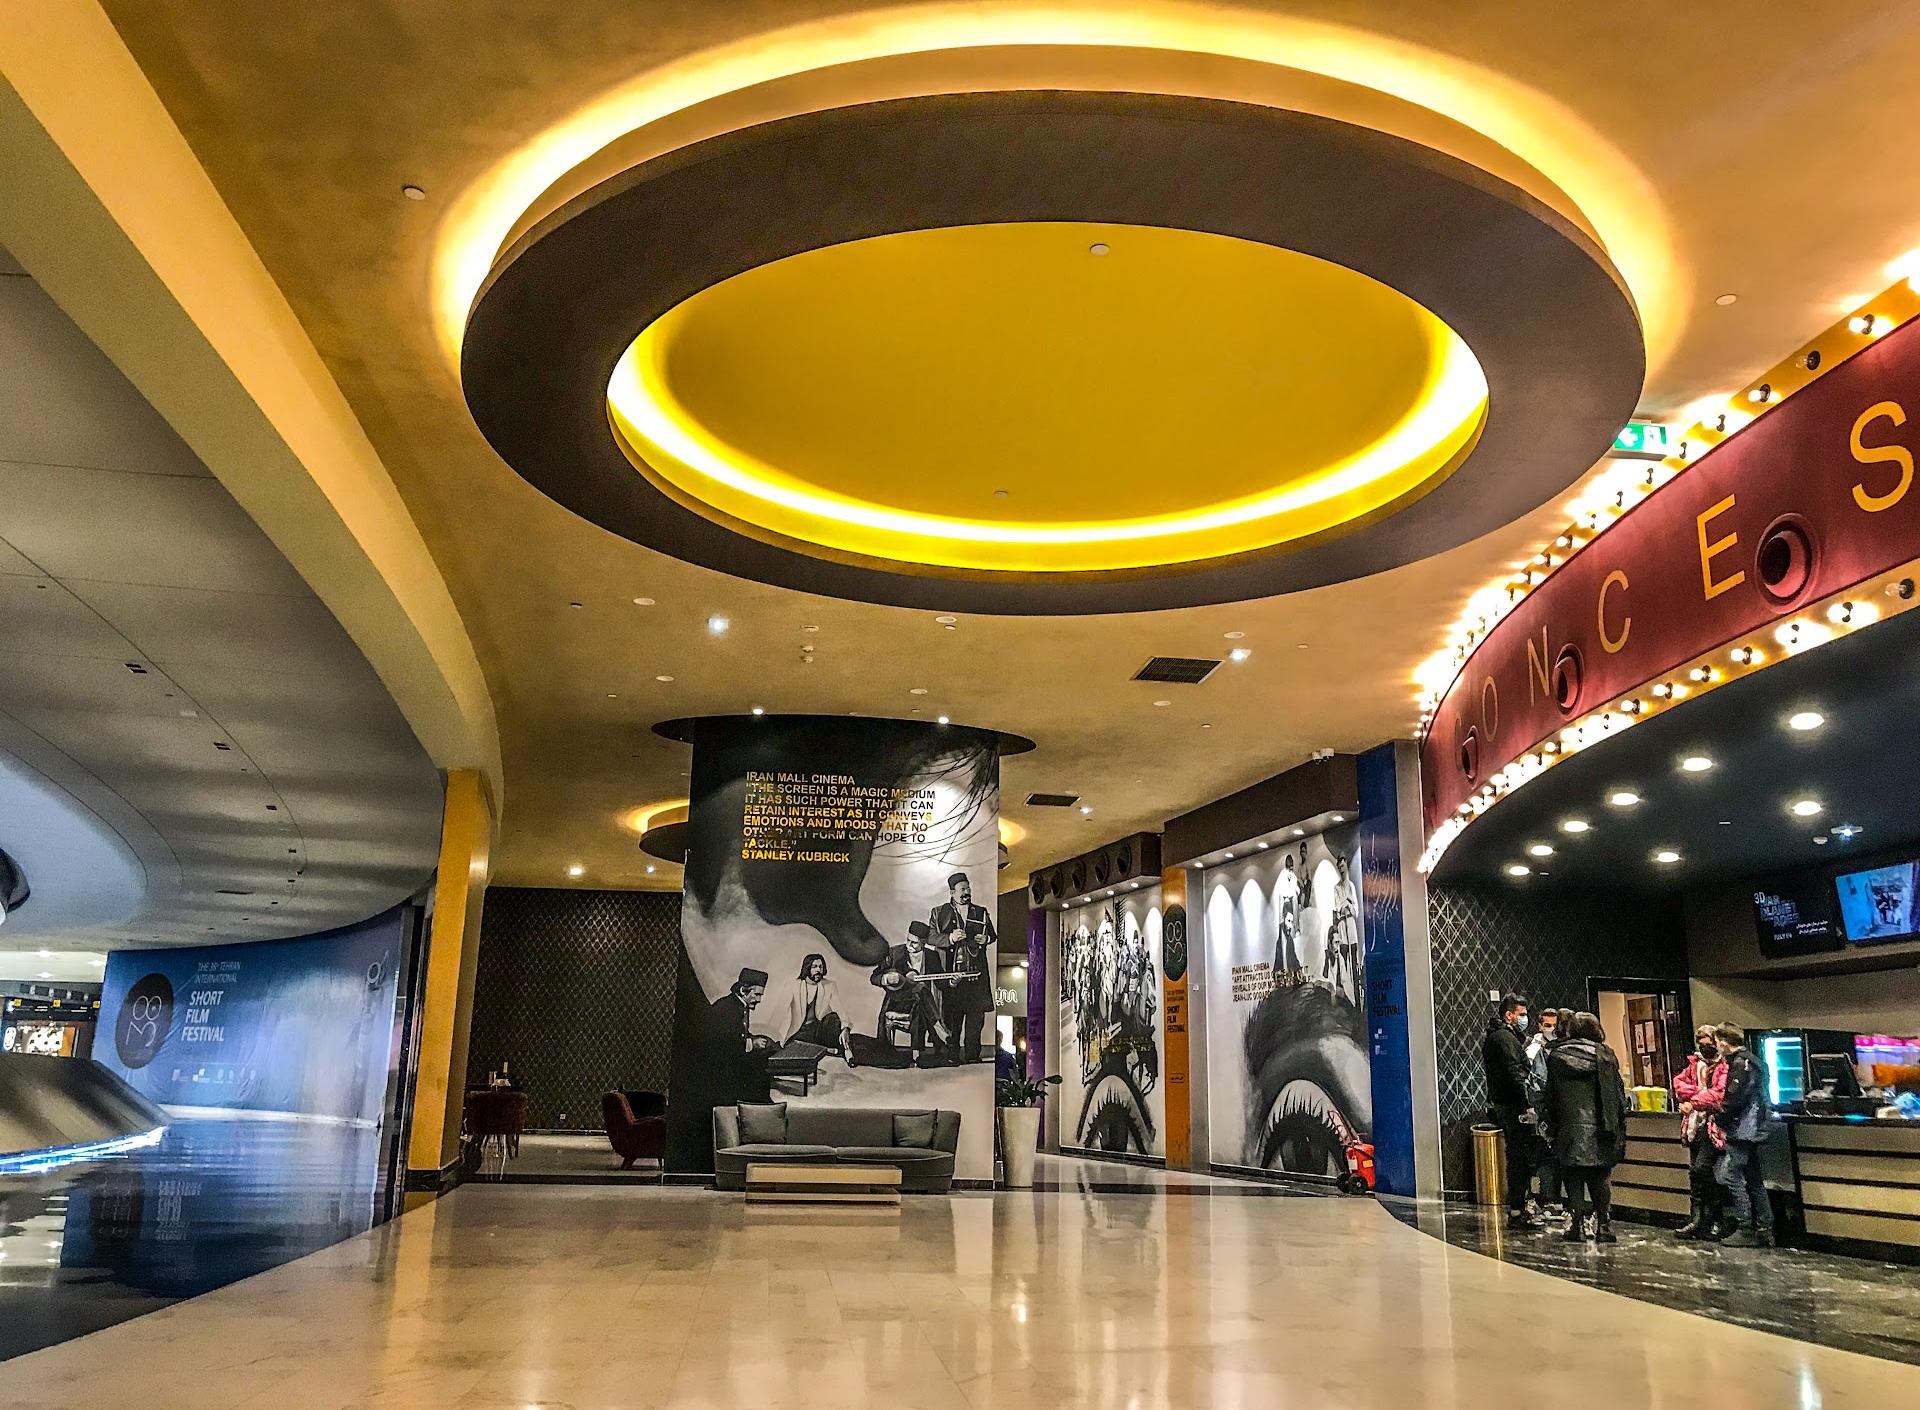 Iran Mall Cinema